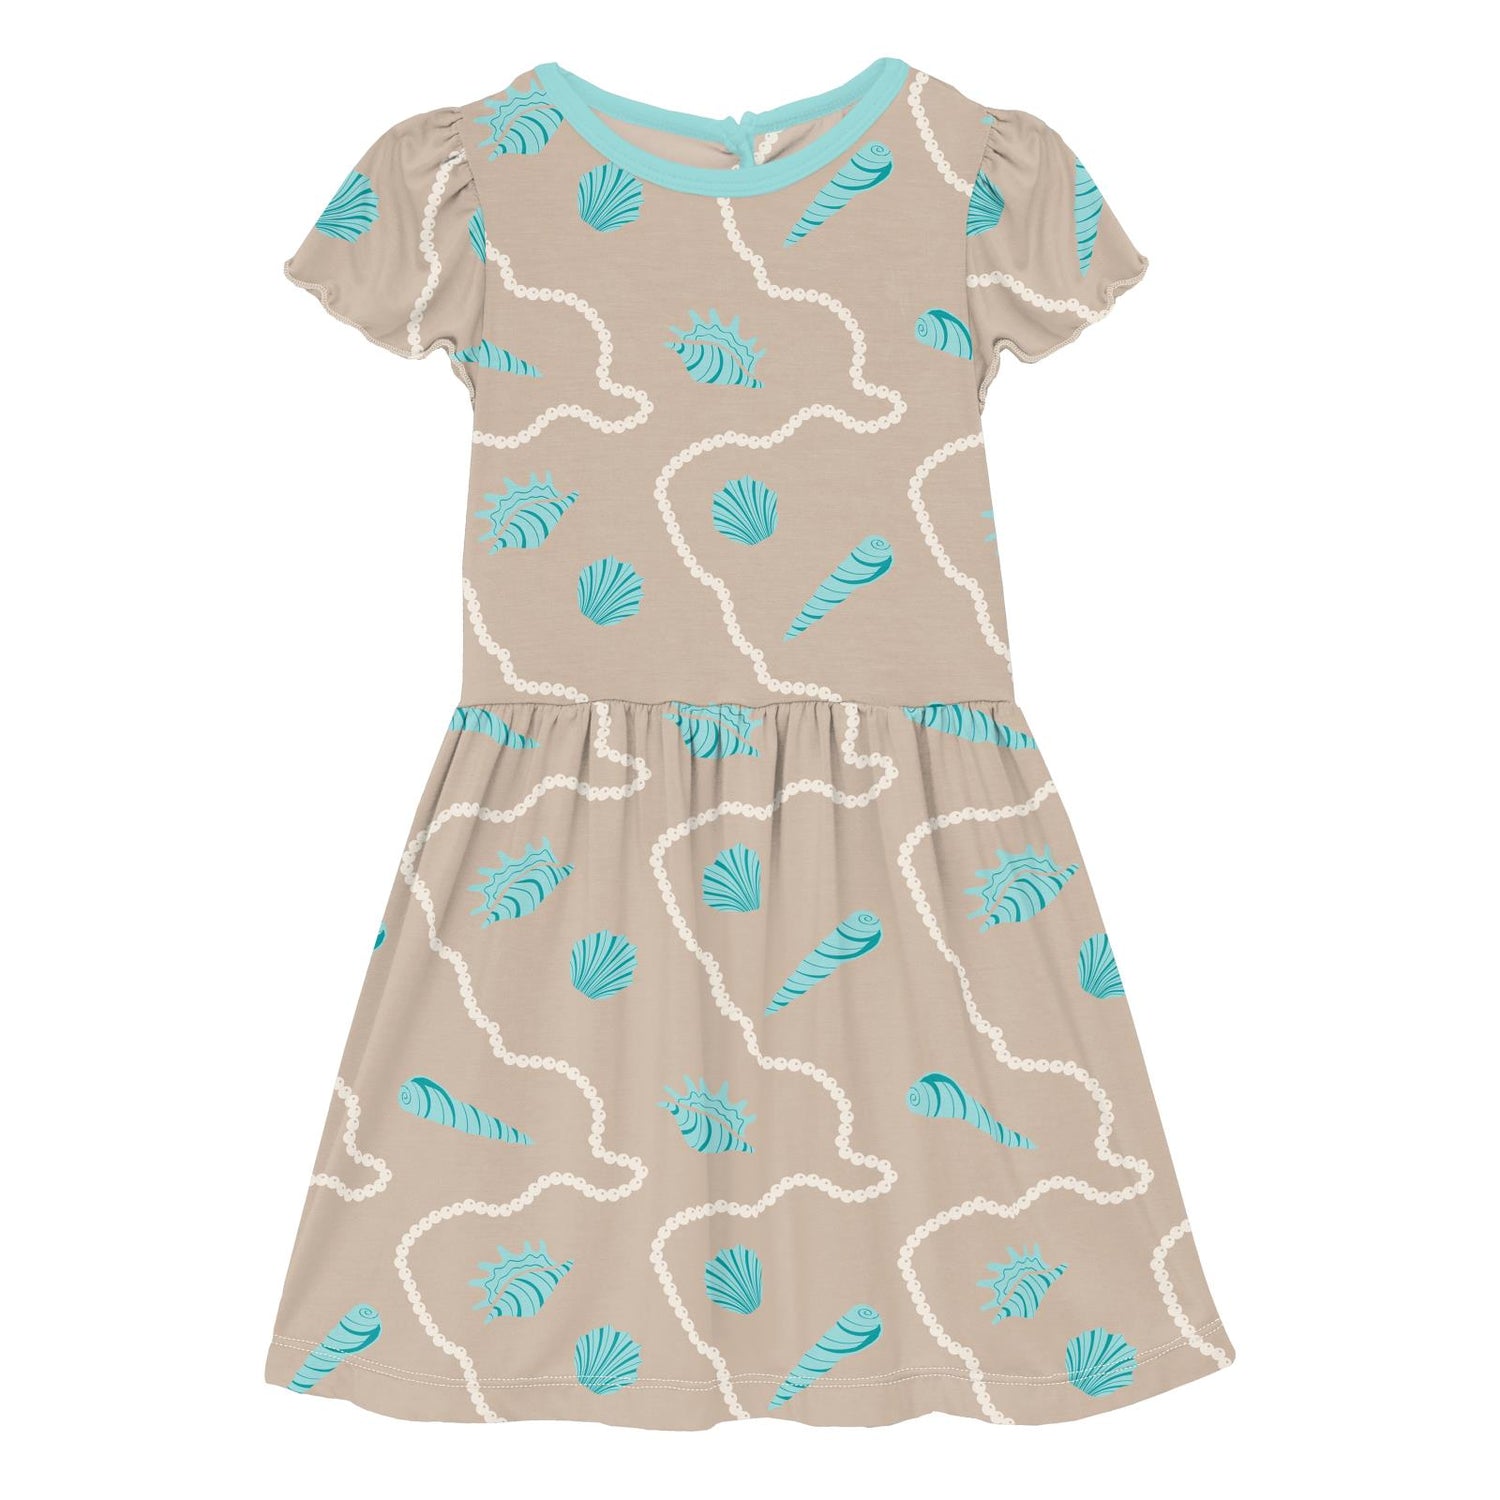 Print Flutter Sleeve Twirl Dress in Burlap Shells with Summer Sky